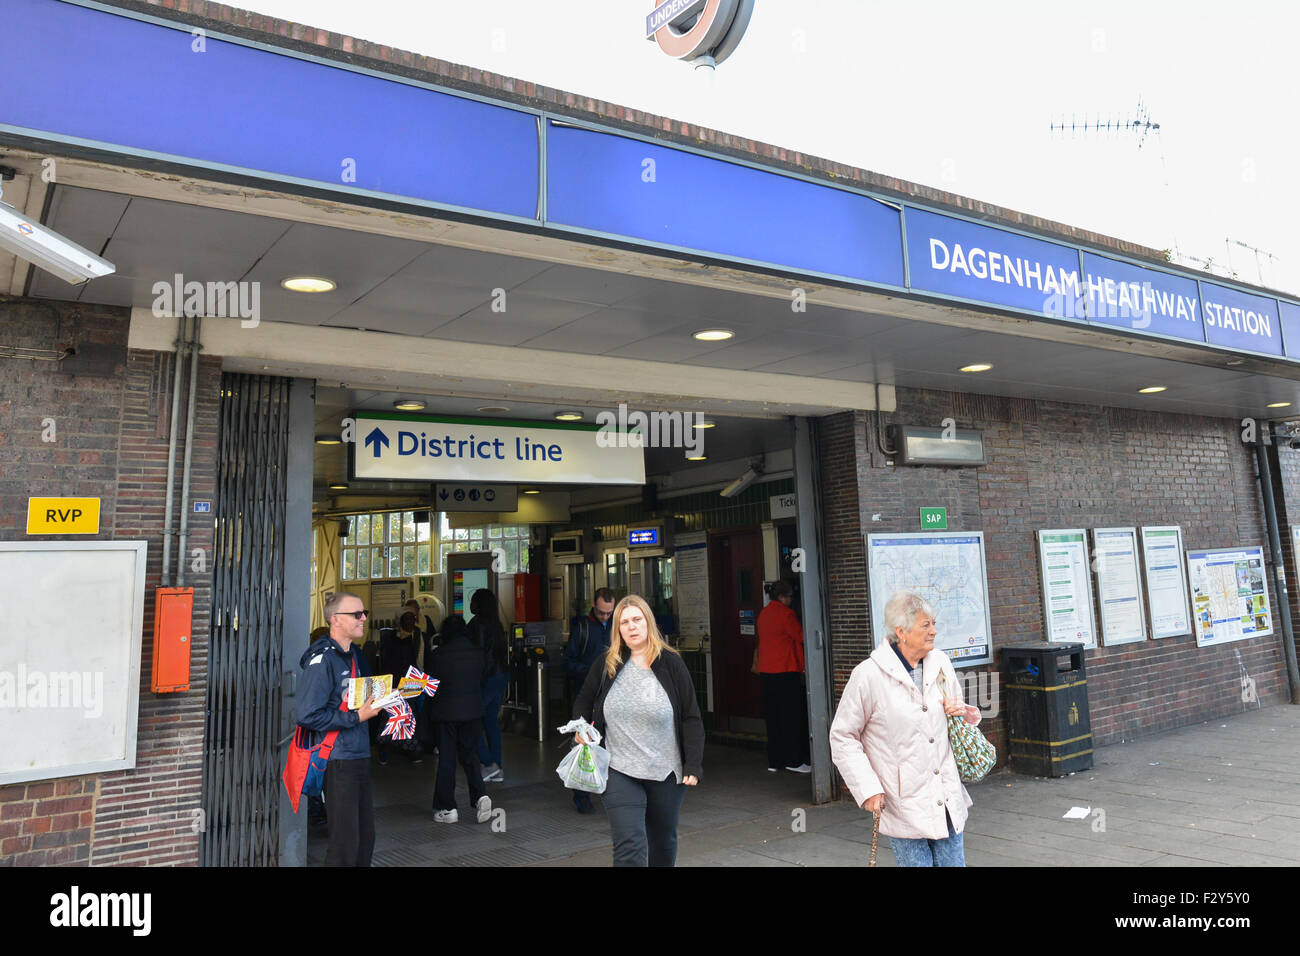 Dagenham Heathway Station High Resolution Stock Photography And Images Alamy